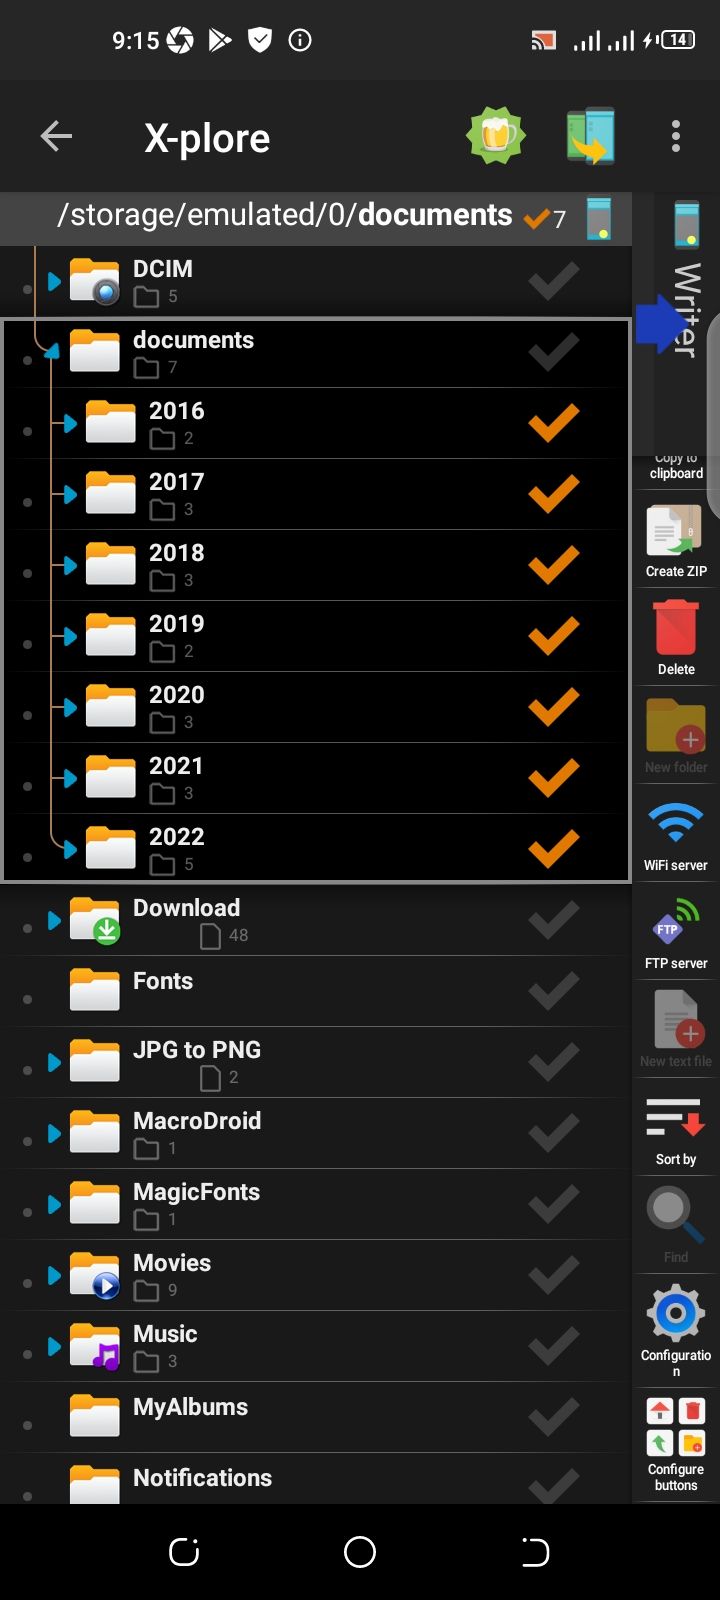 Organized folders on X-plore